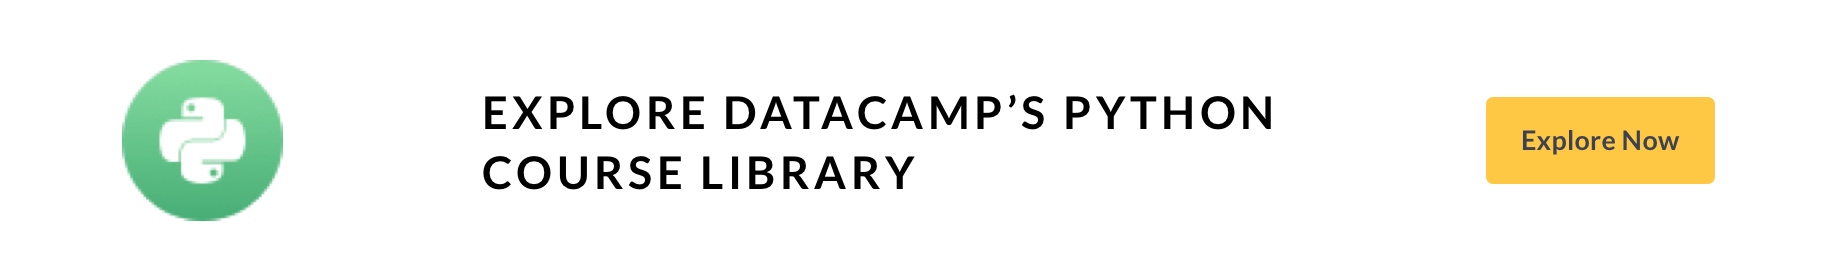 explore datacamp's python course library banner